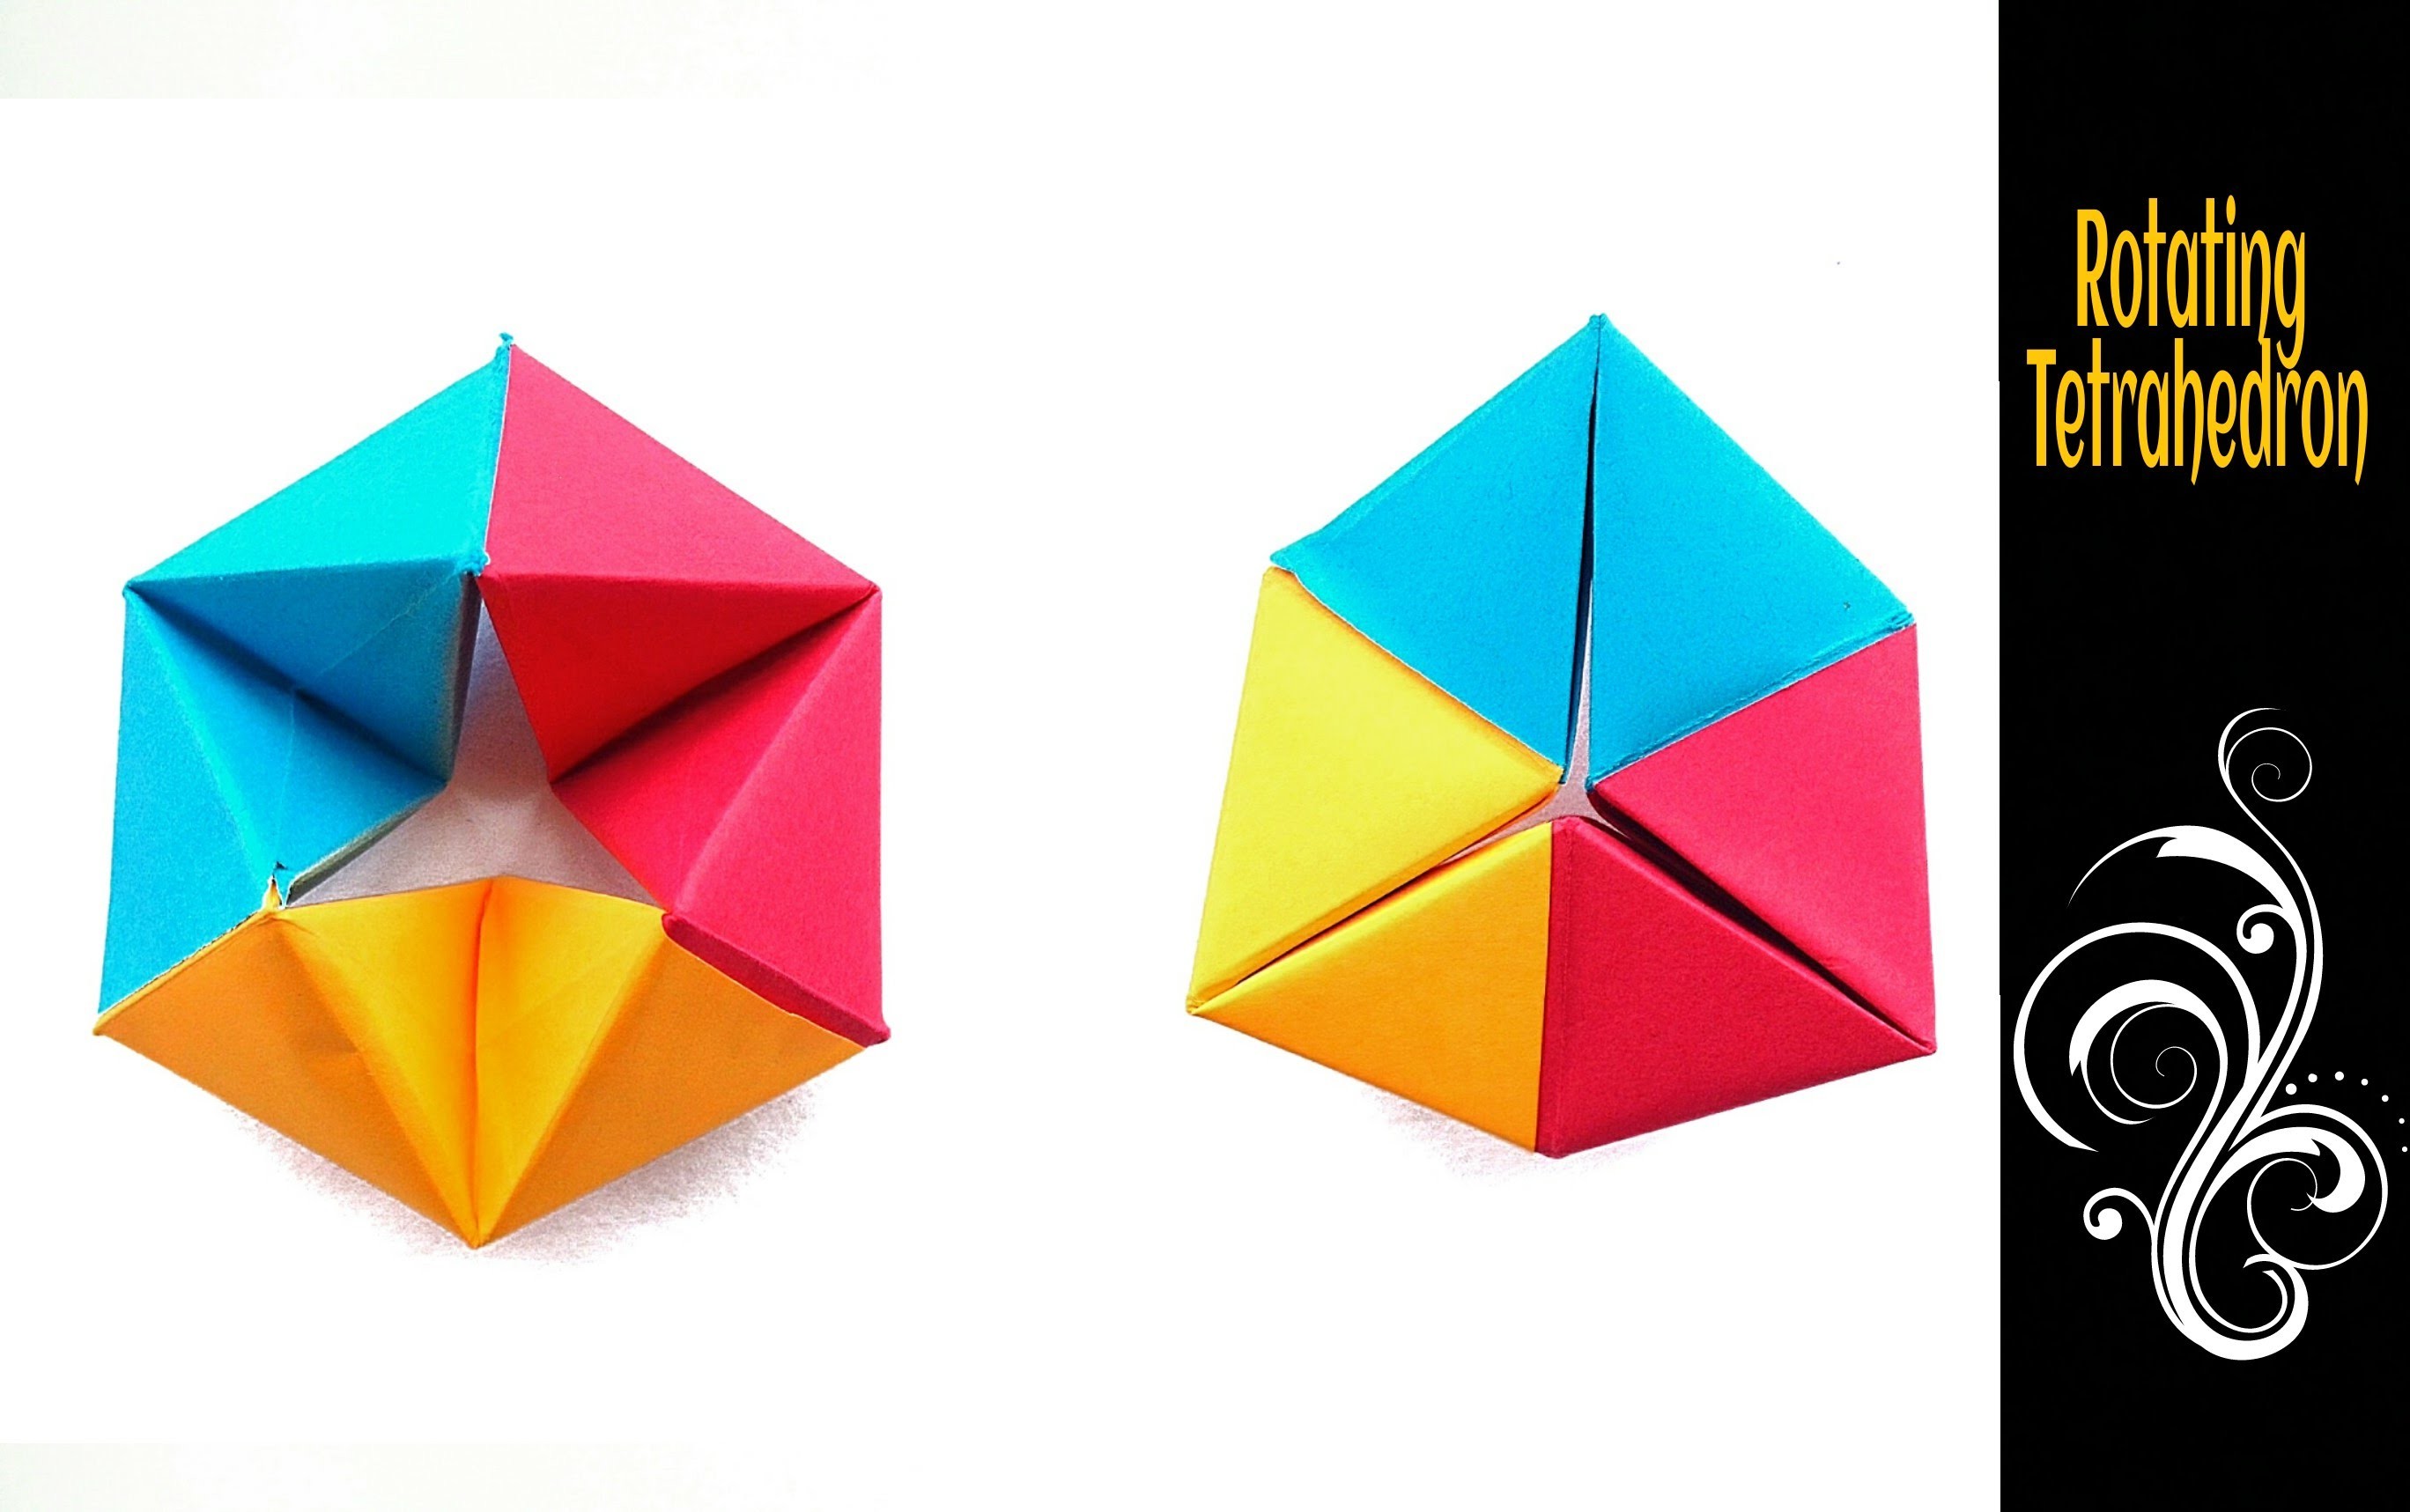 Action Fun Toy Origami Paper Modular Rotating Tetrahedron